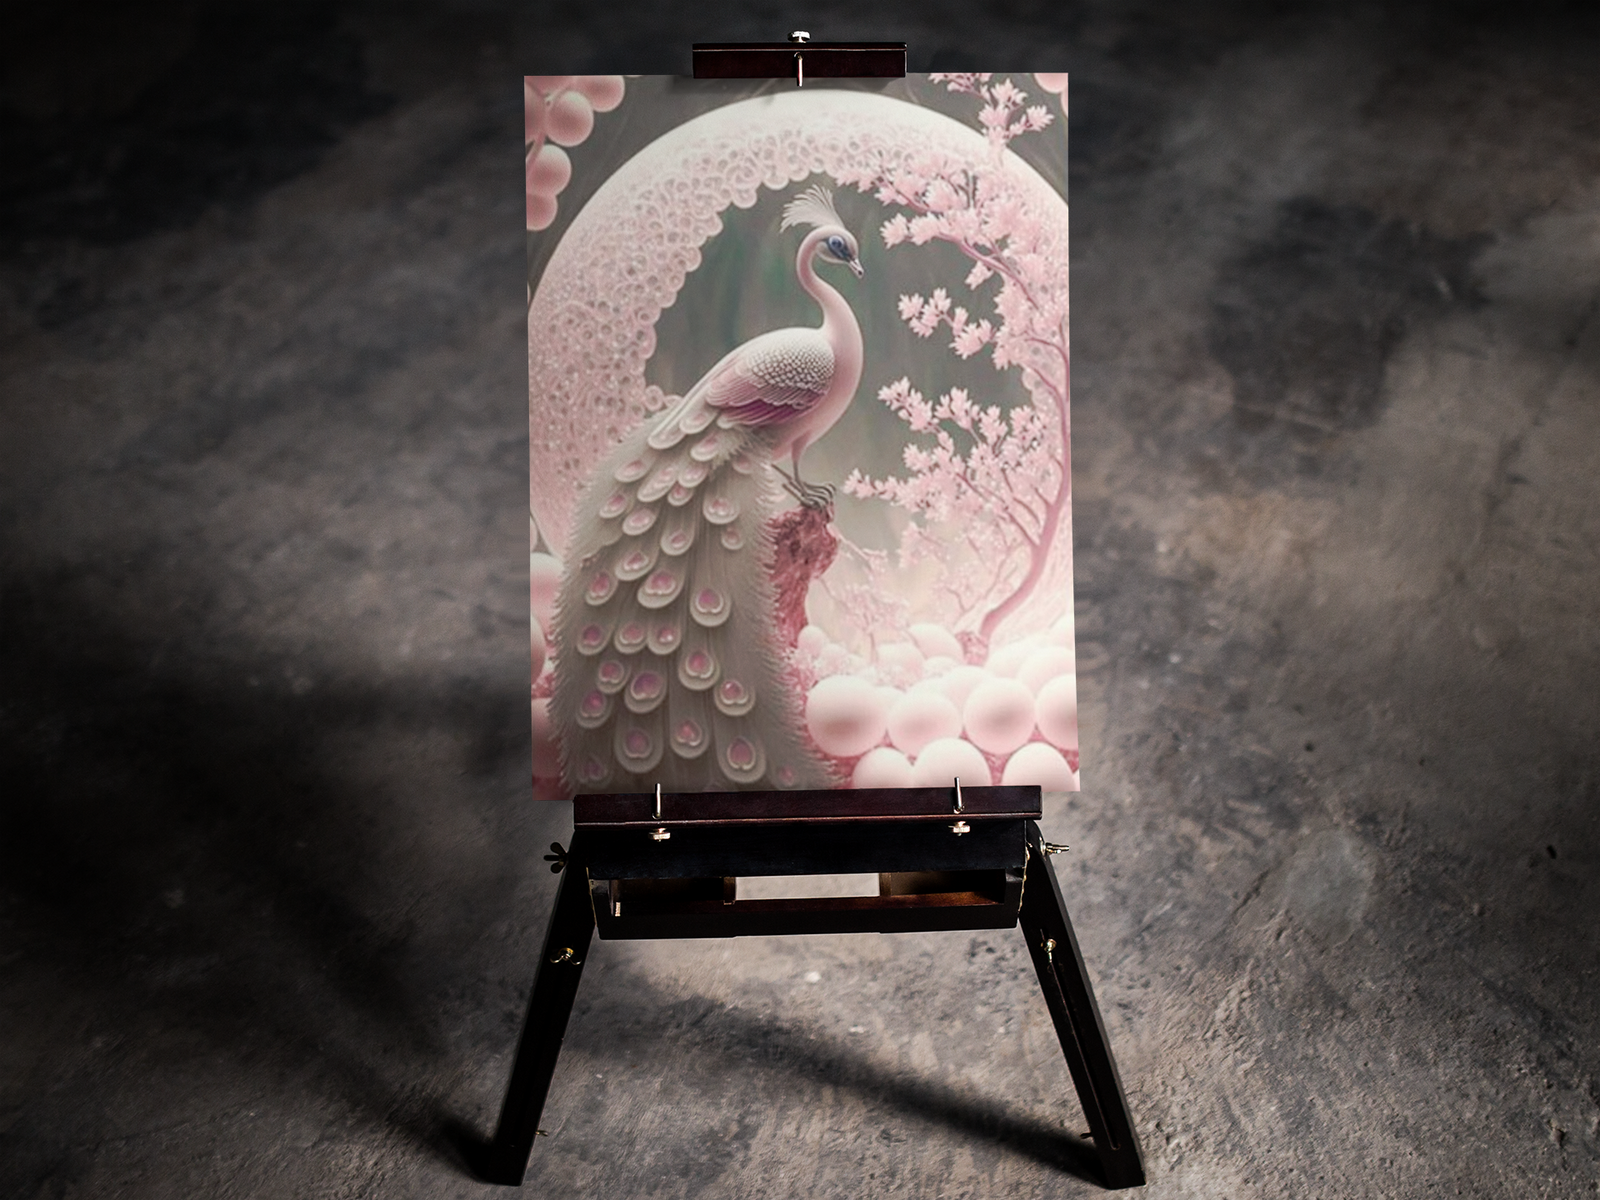 Pink Peacock 5D Diamond Art Kit